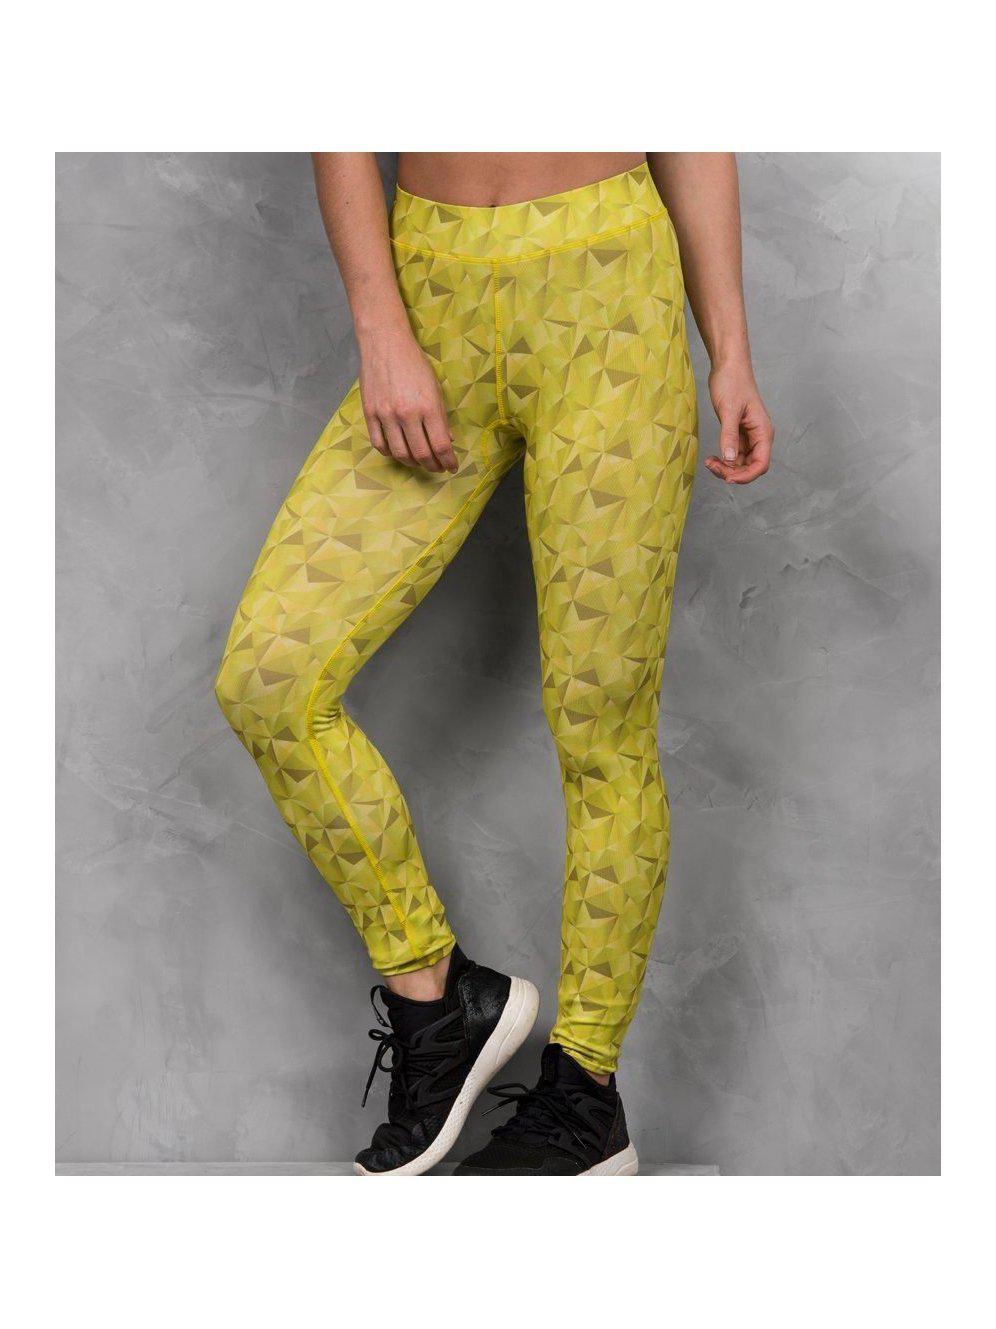 Lemon Lime gym leggings